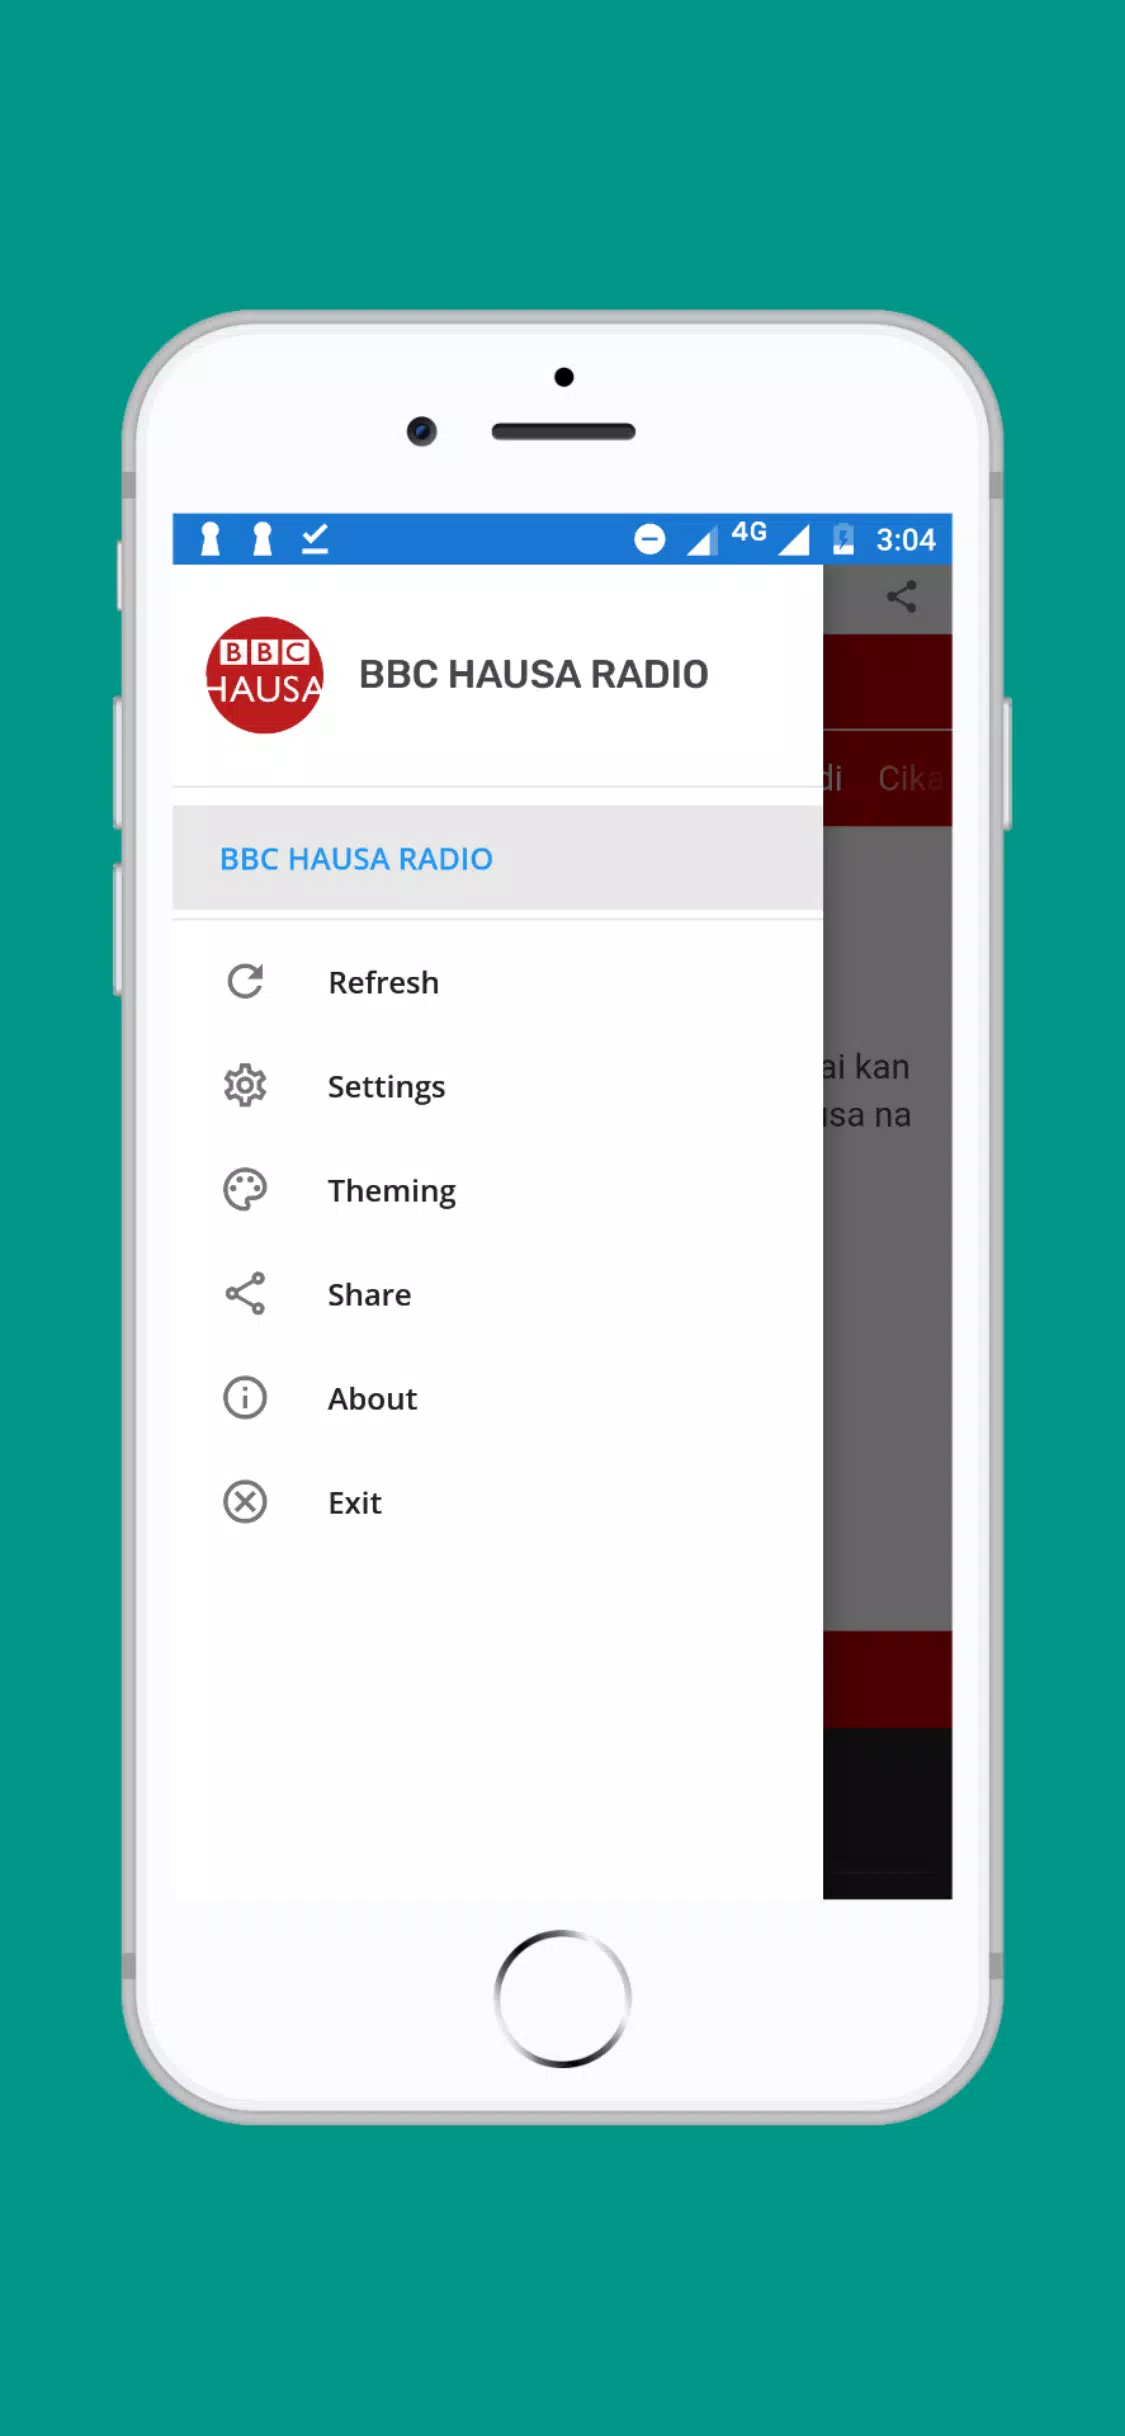 RADIO BBC HAUSA AUDIO for Android - APK Download